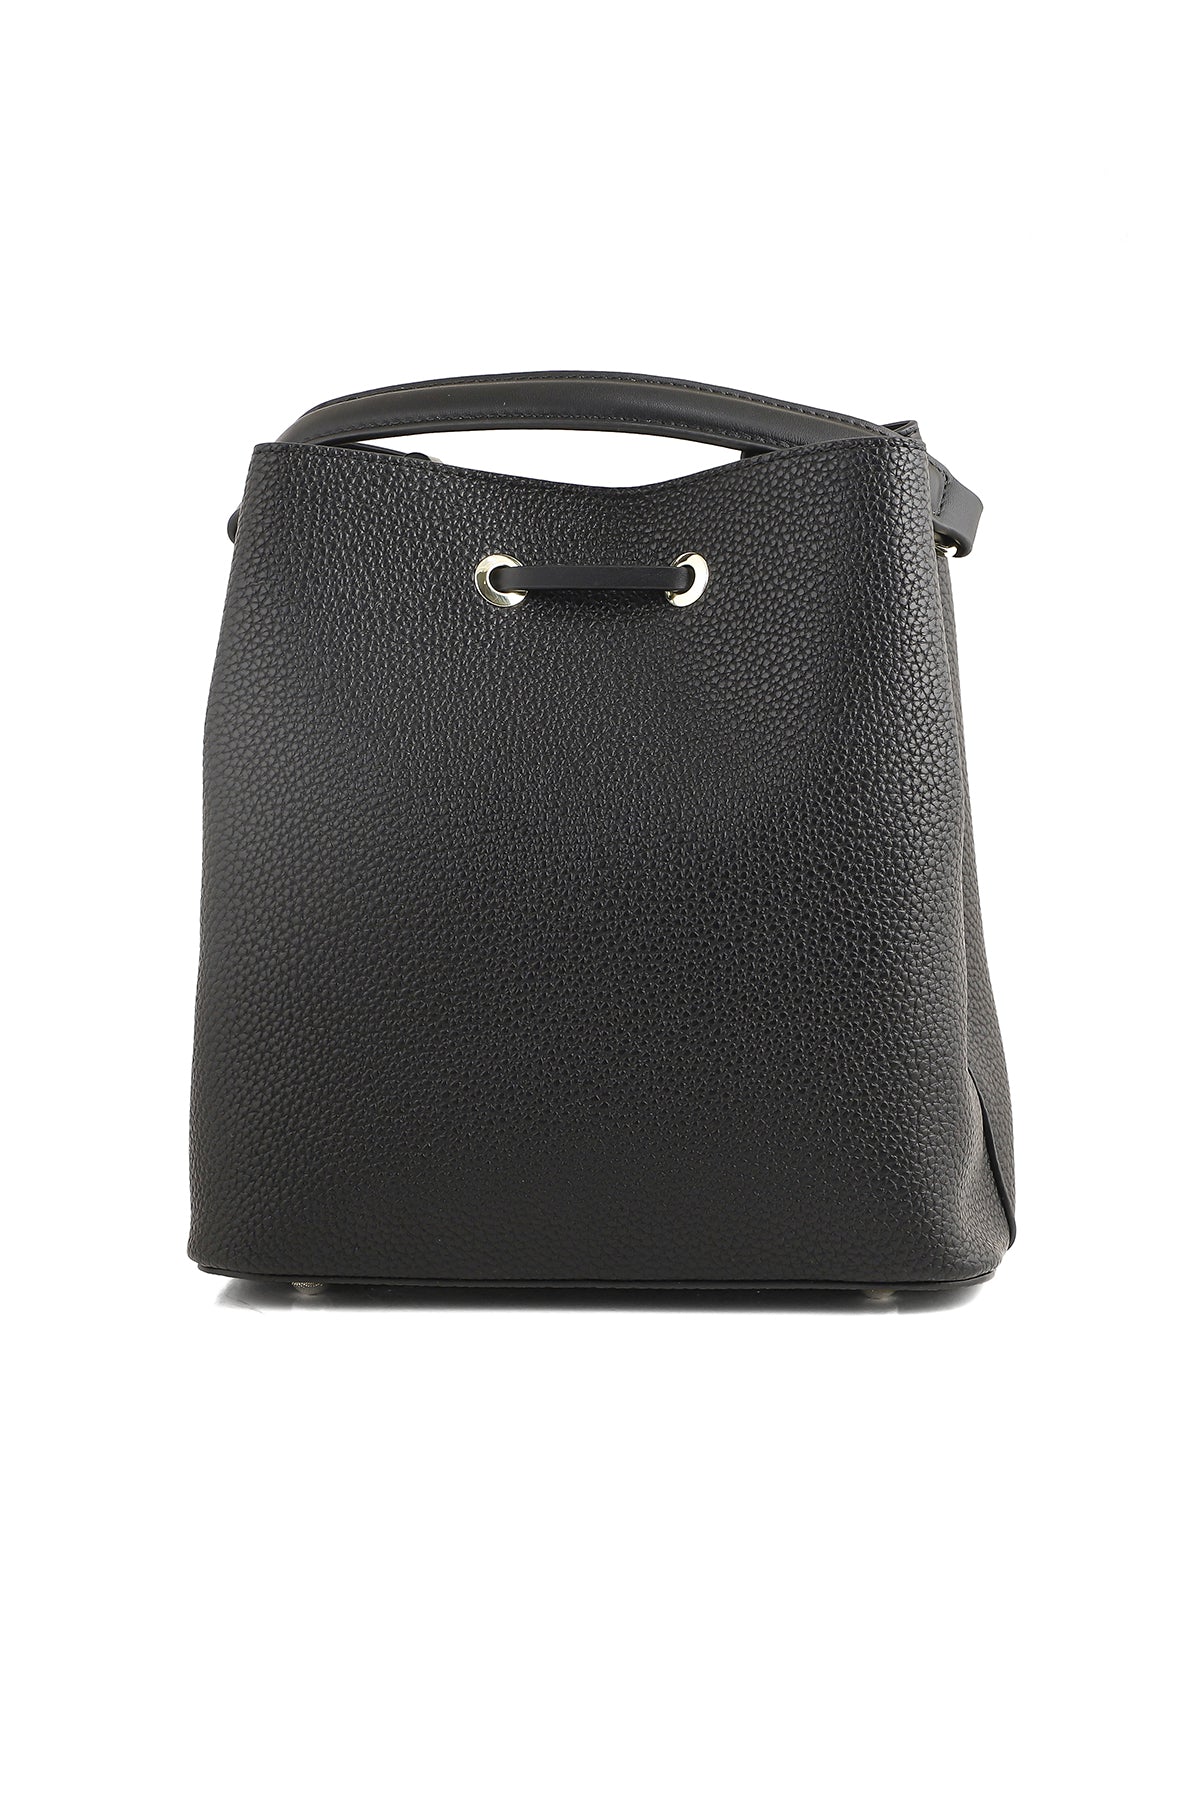 Bucket Hand Bags B14982-Black